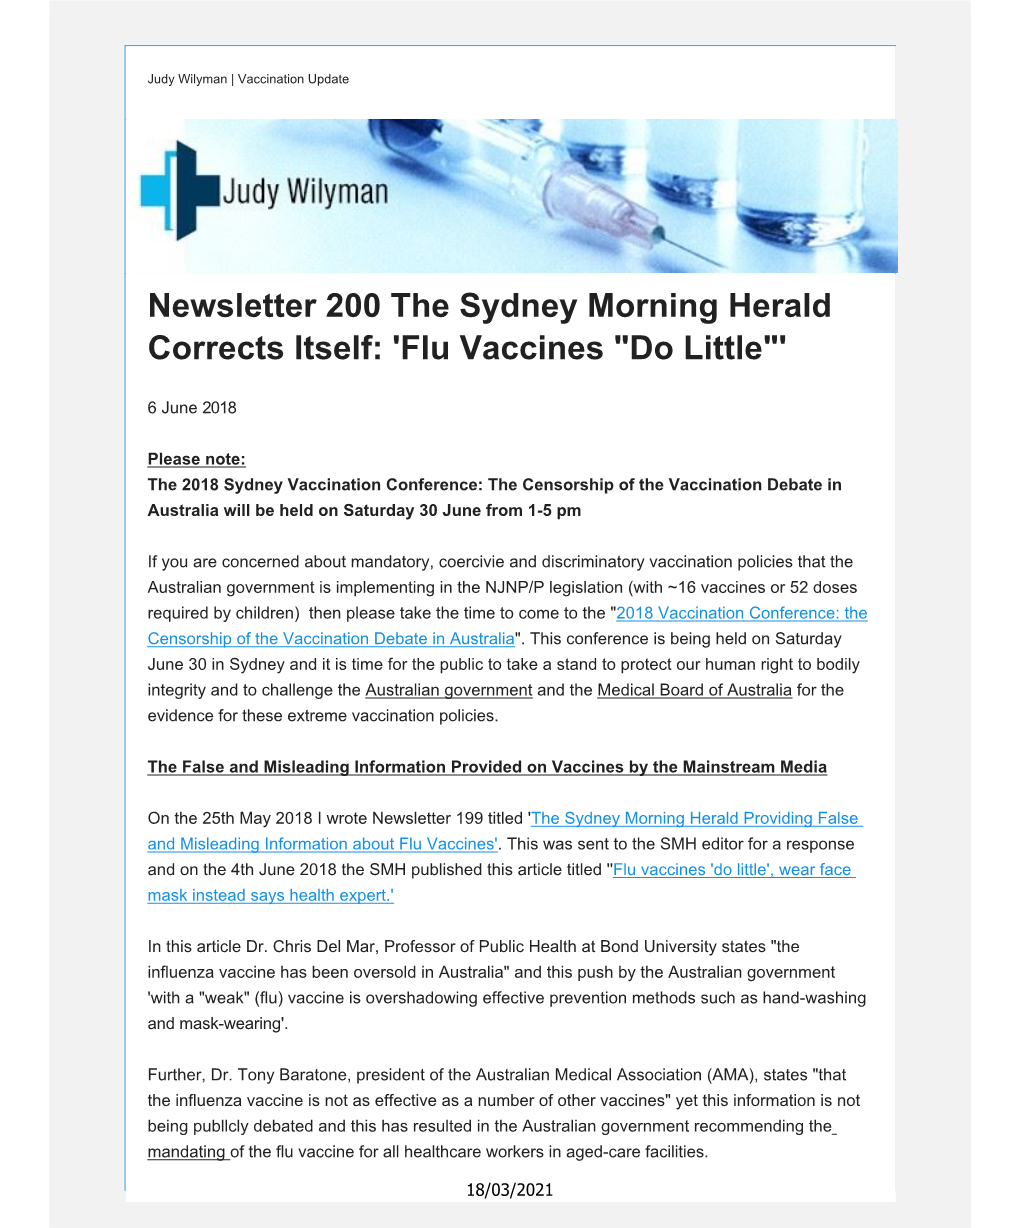 Newsletter 200 the Sydney Morning Herald Corrects Itself: 'Flu Vaccines "Do Little"'